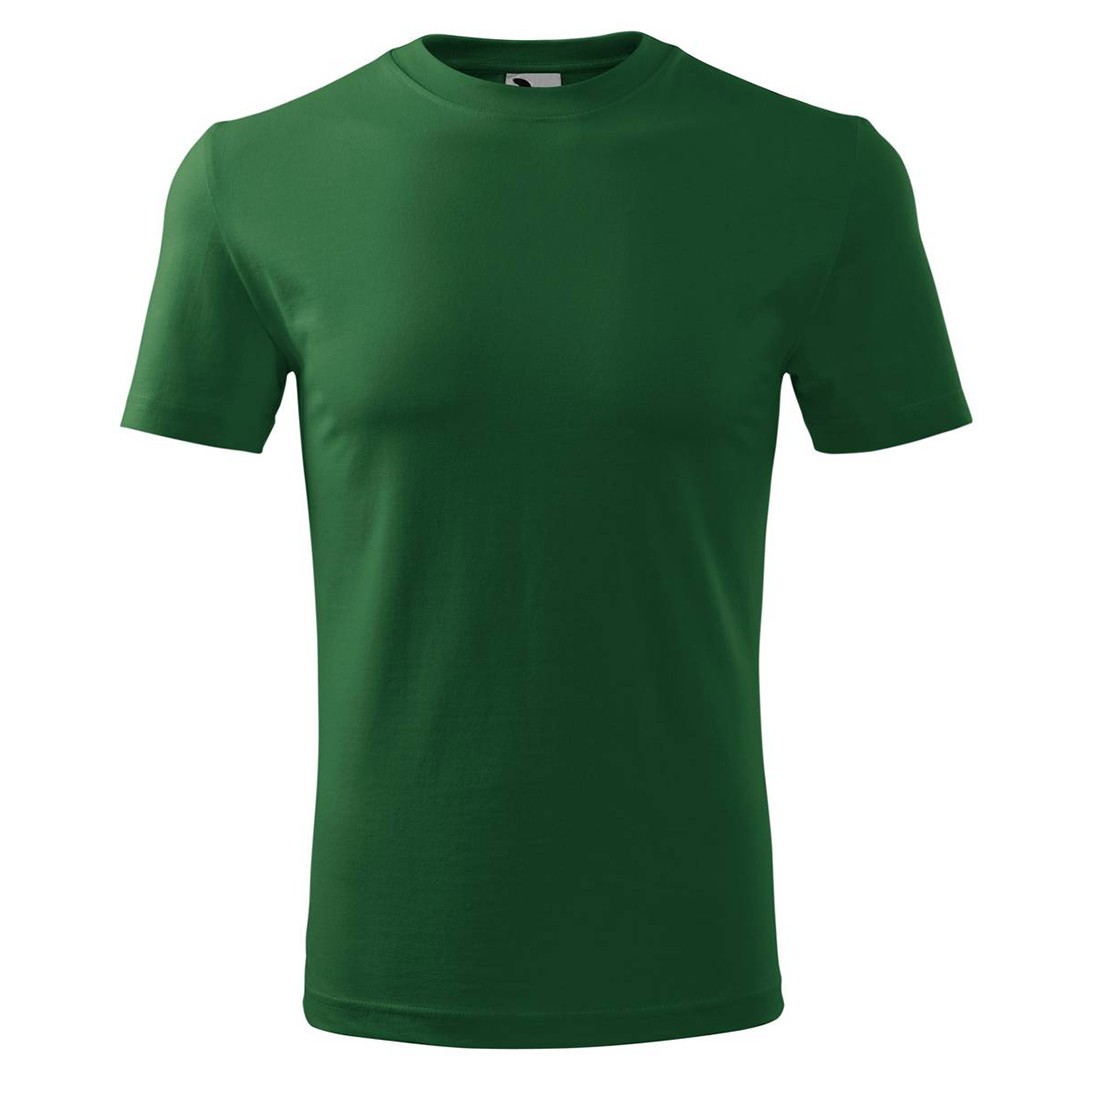 Tee-shirt CLASSIC NEW - Les vêtements de protection